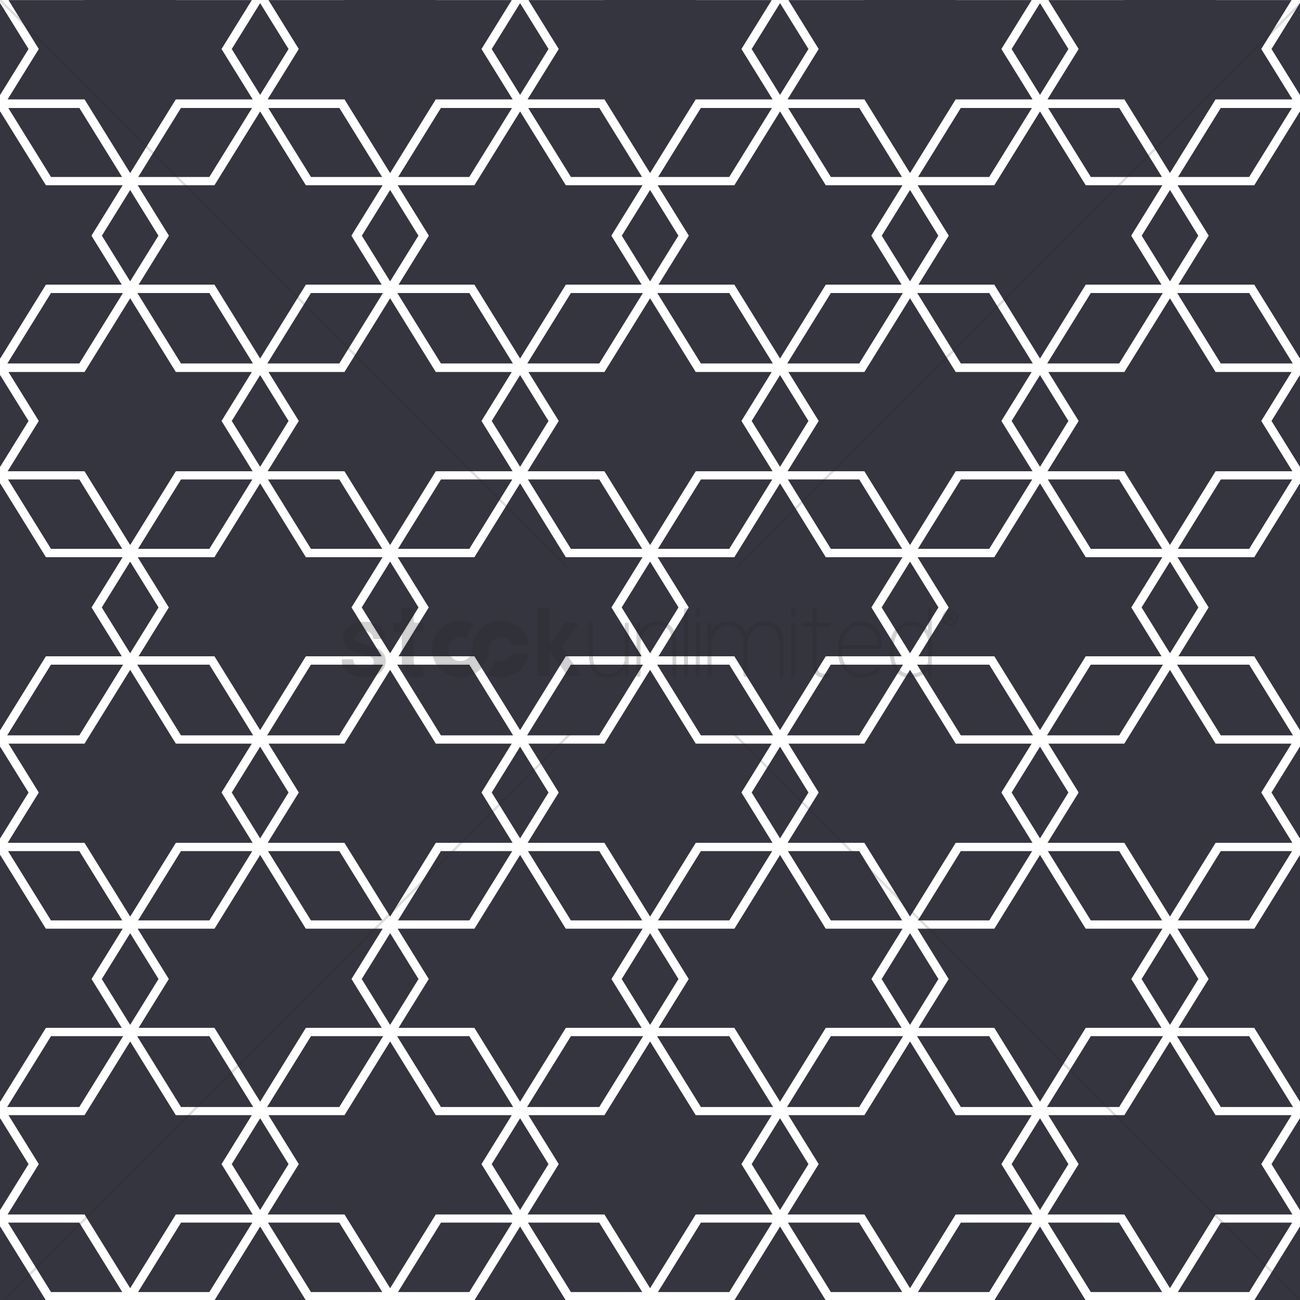 Islamic geometric pattern design Vector Image